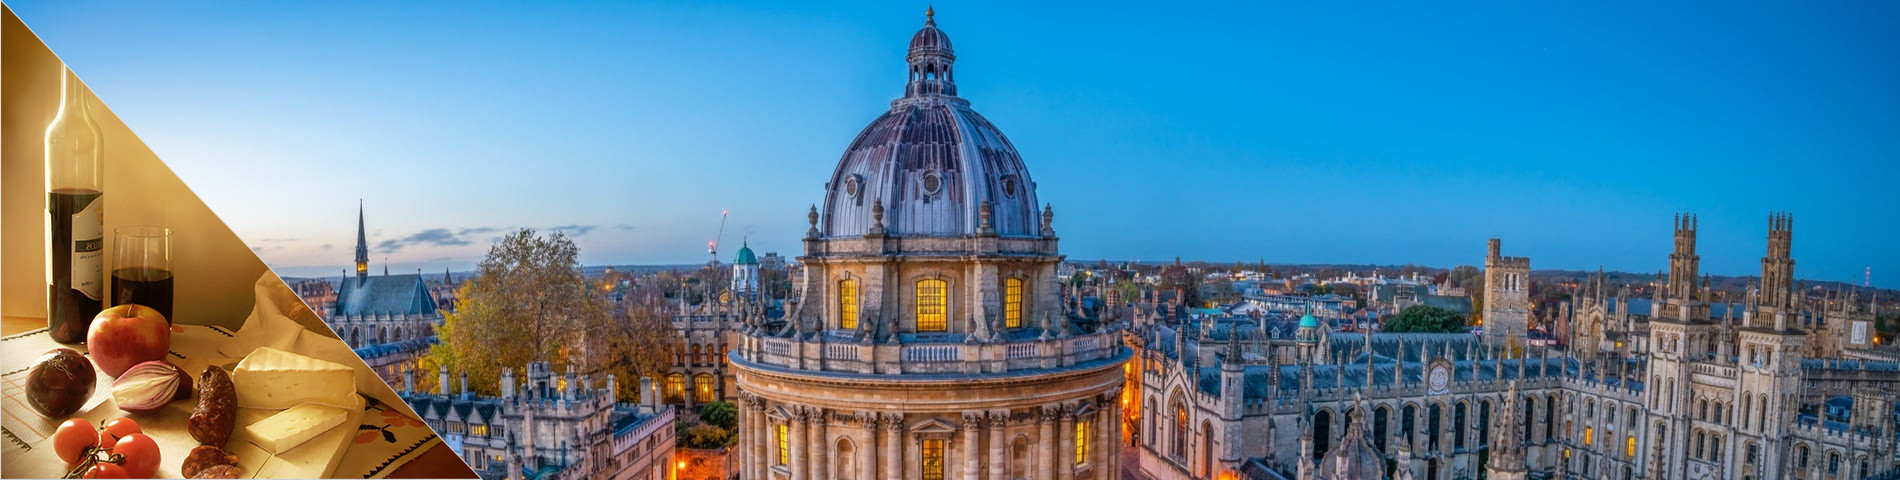 Oxford - Engels & cultuur